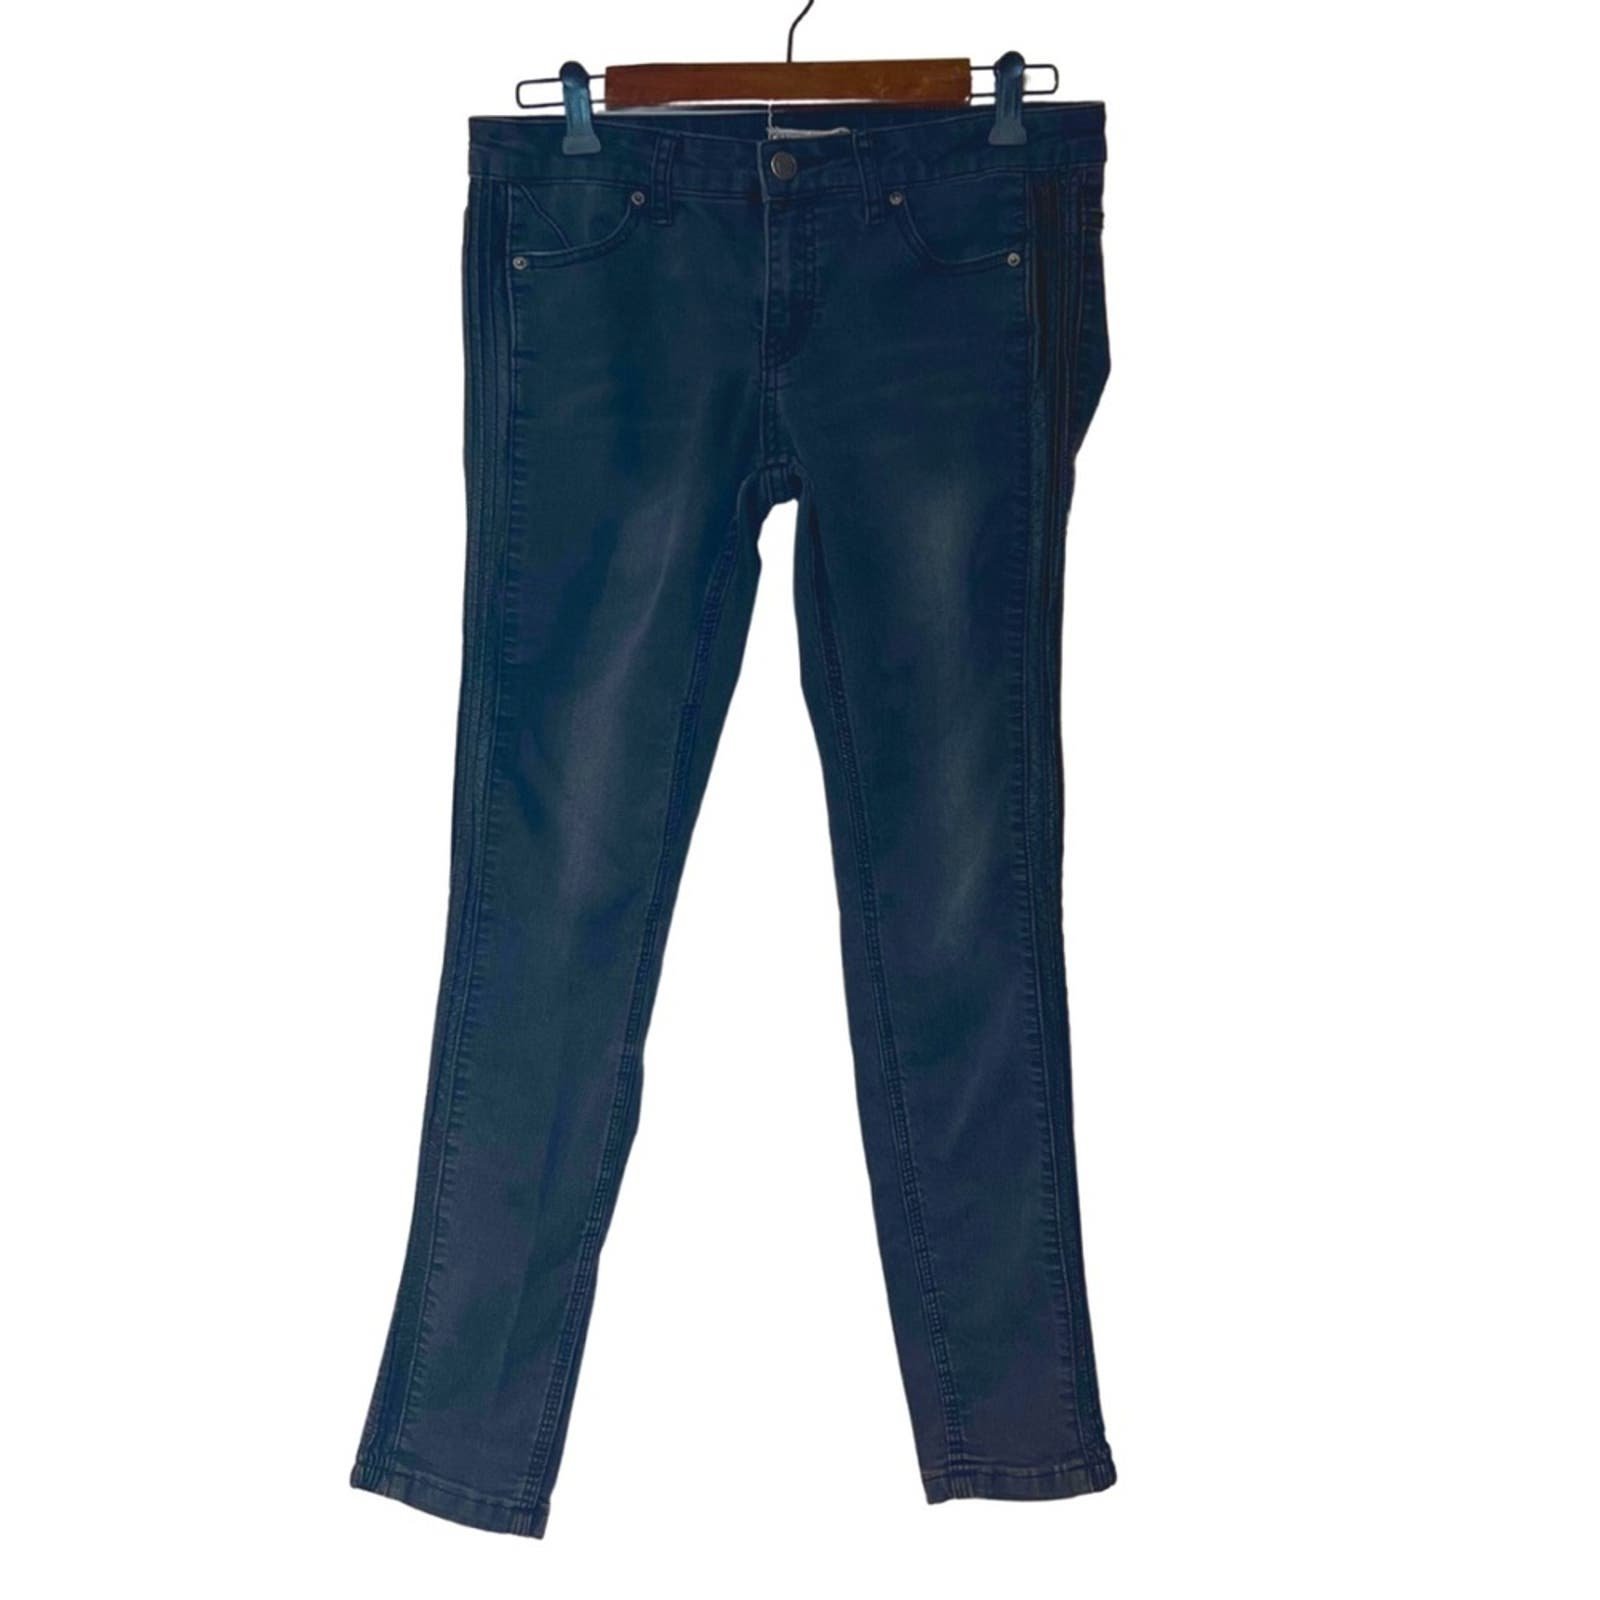 Affordable Free People Skinny Jeans pJ9GvAB3C Zero Profit 